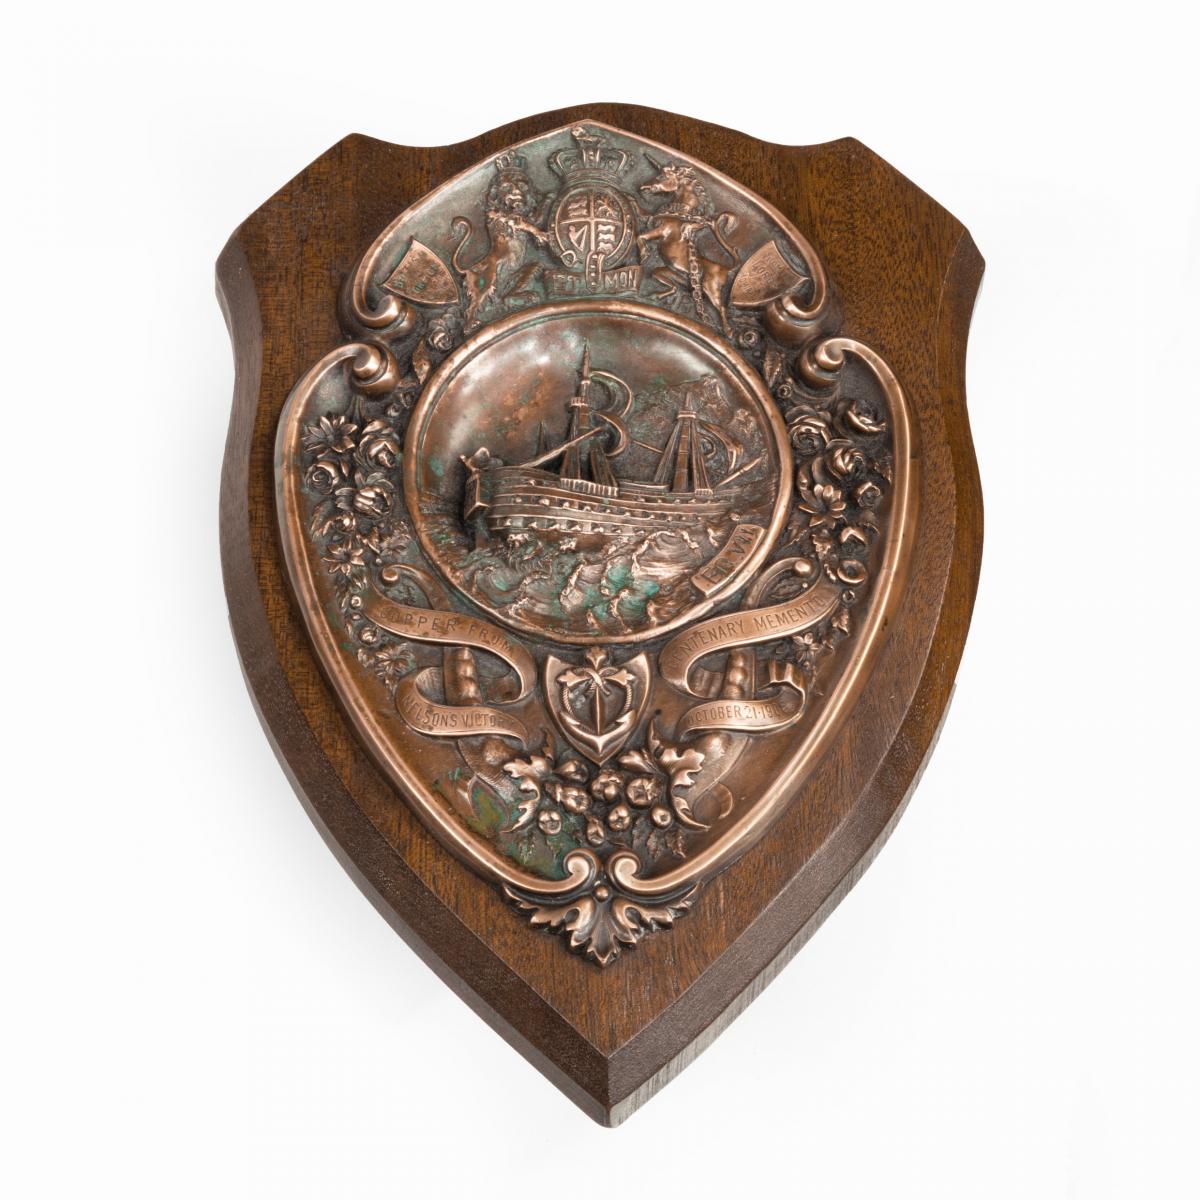 A HMS Victory centennial copper shield